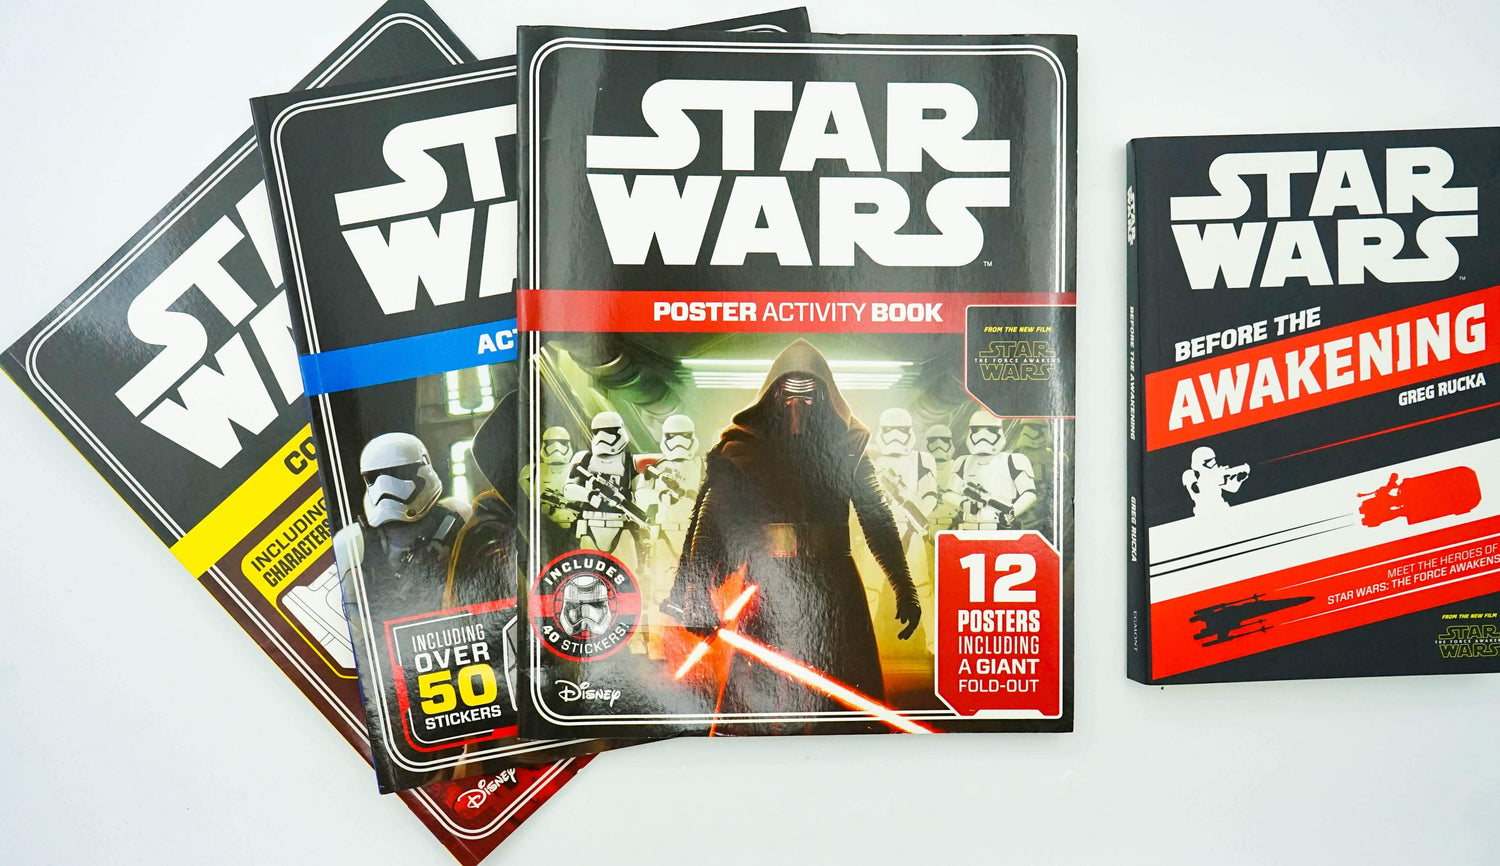 Star Wars:The Force Awaken 4 Book Set